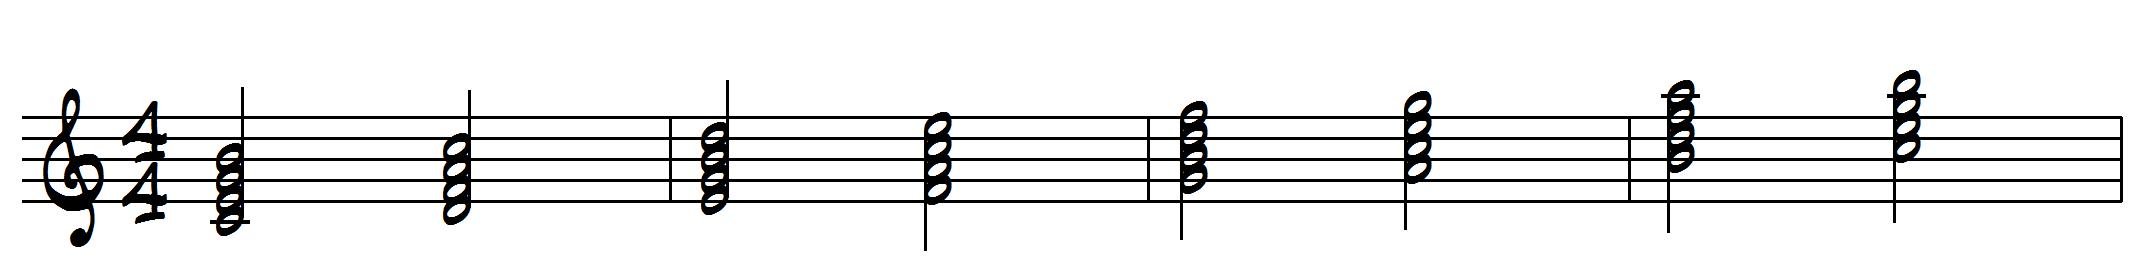 7th-chords-harmonized